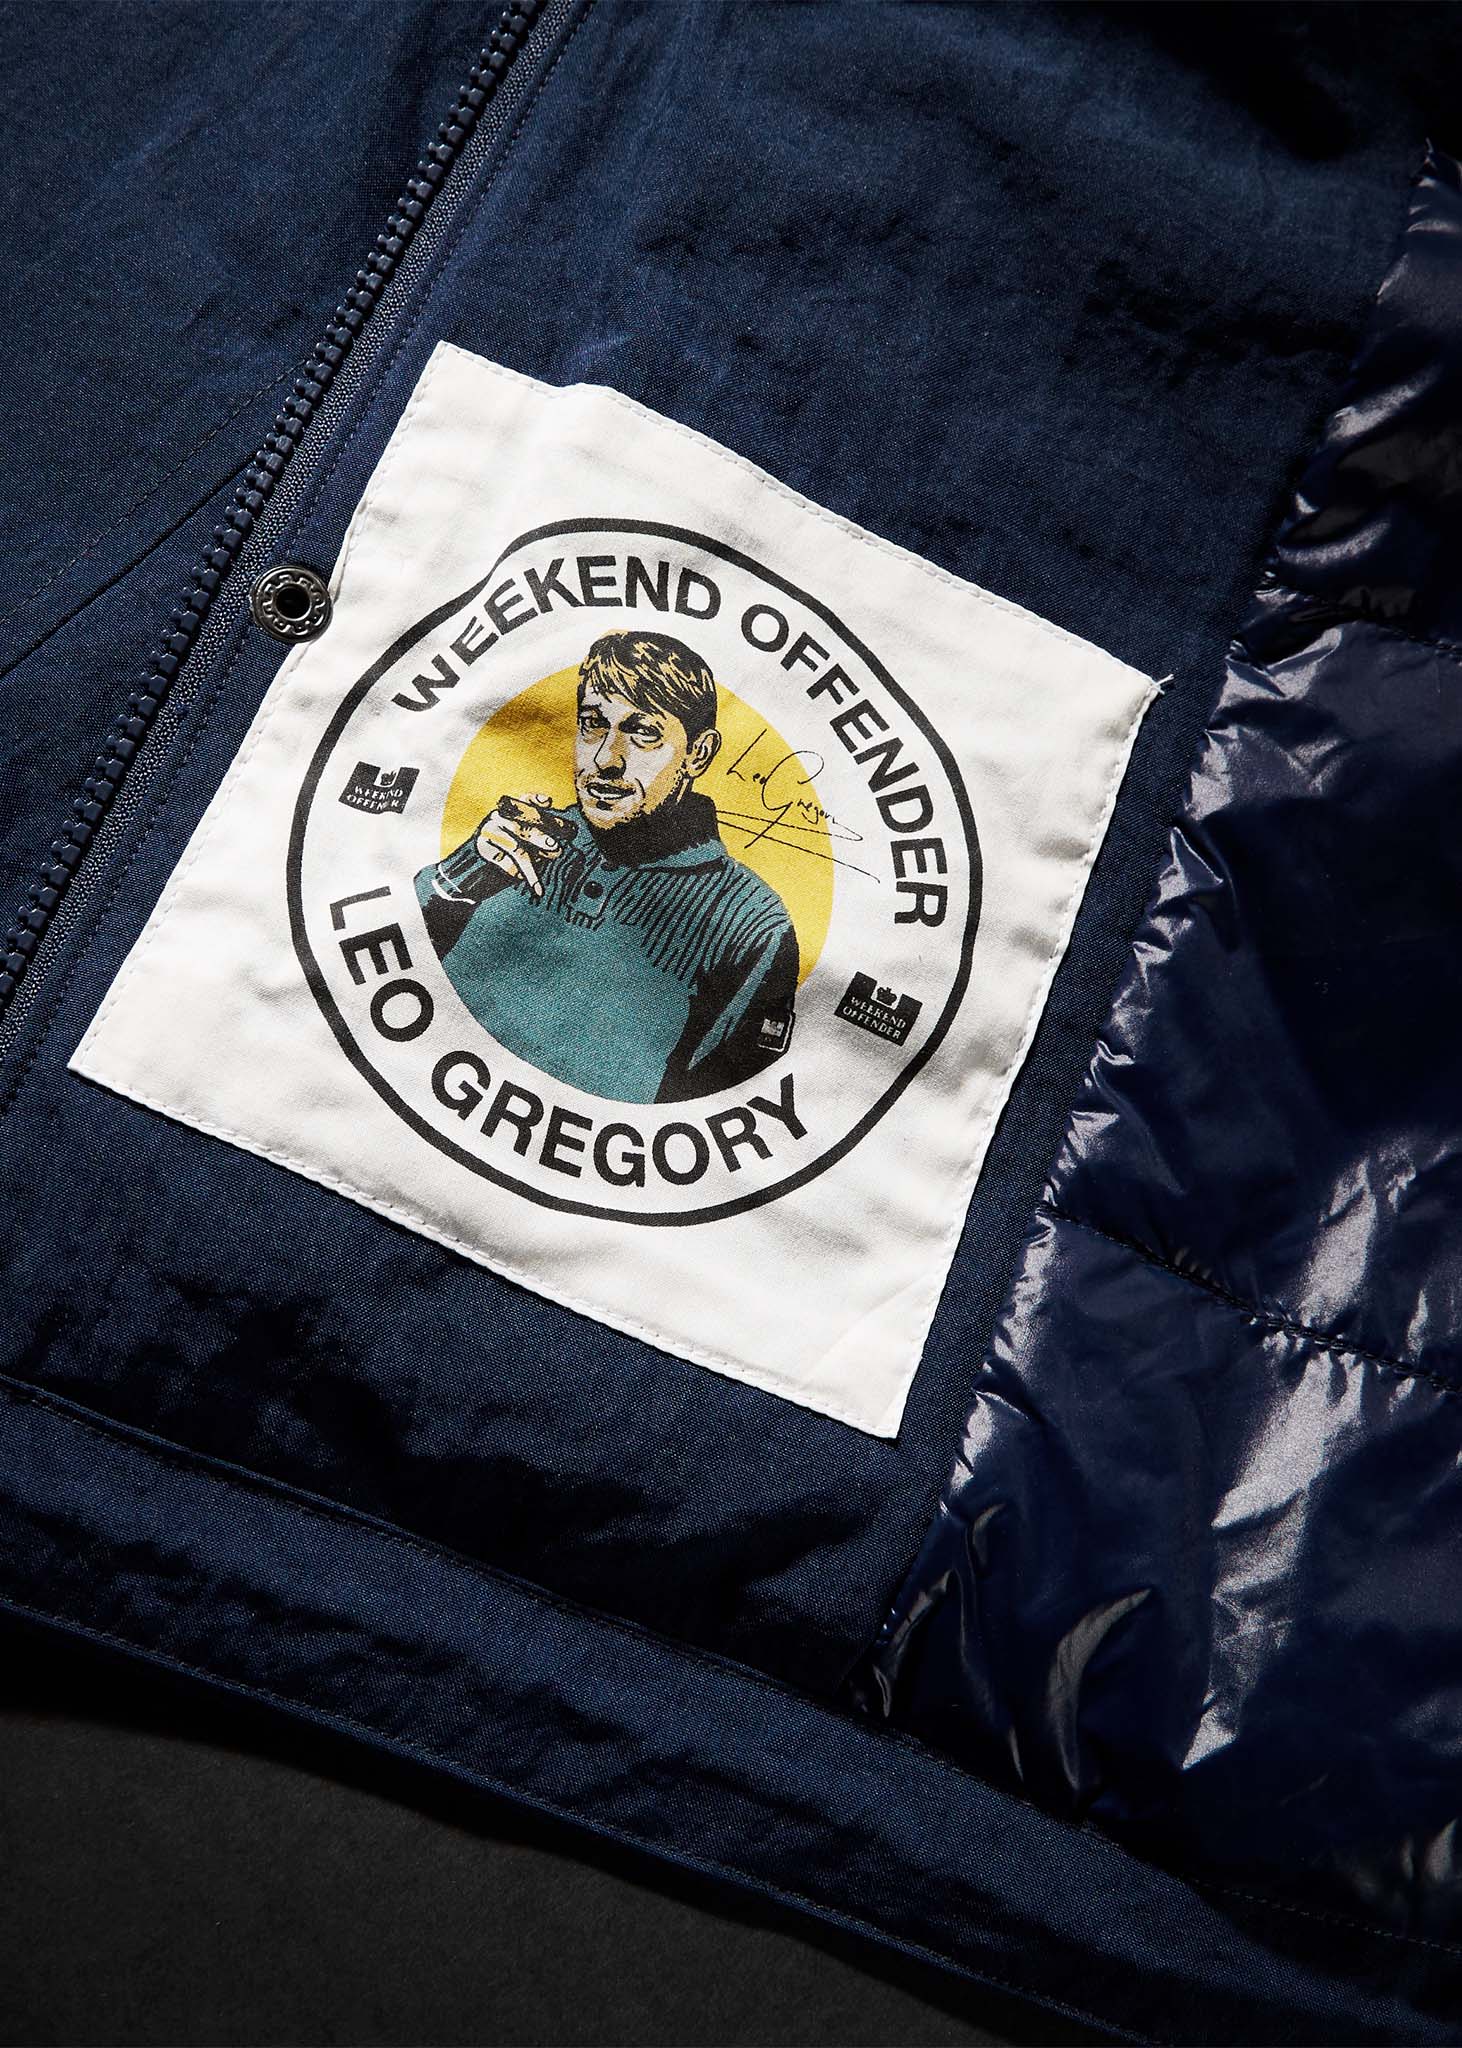 Weekend Offender Jassen  Leo Gregory special jacket - navy 